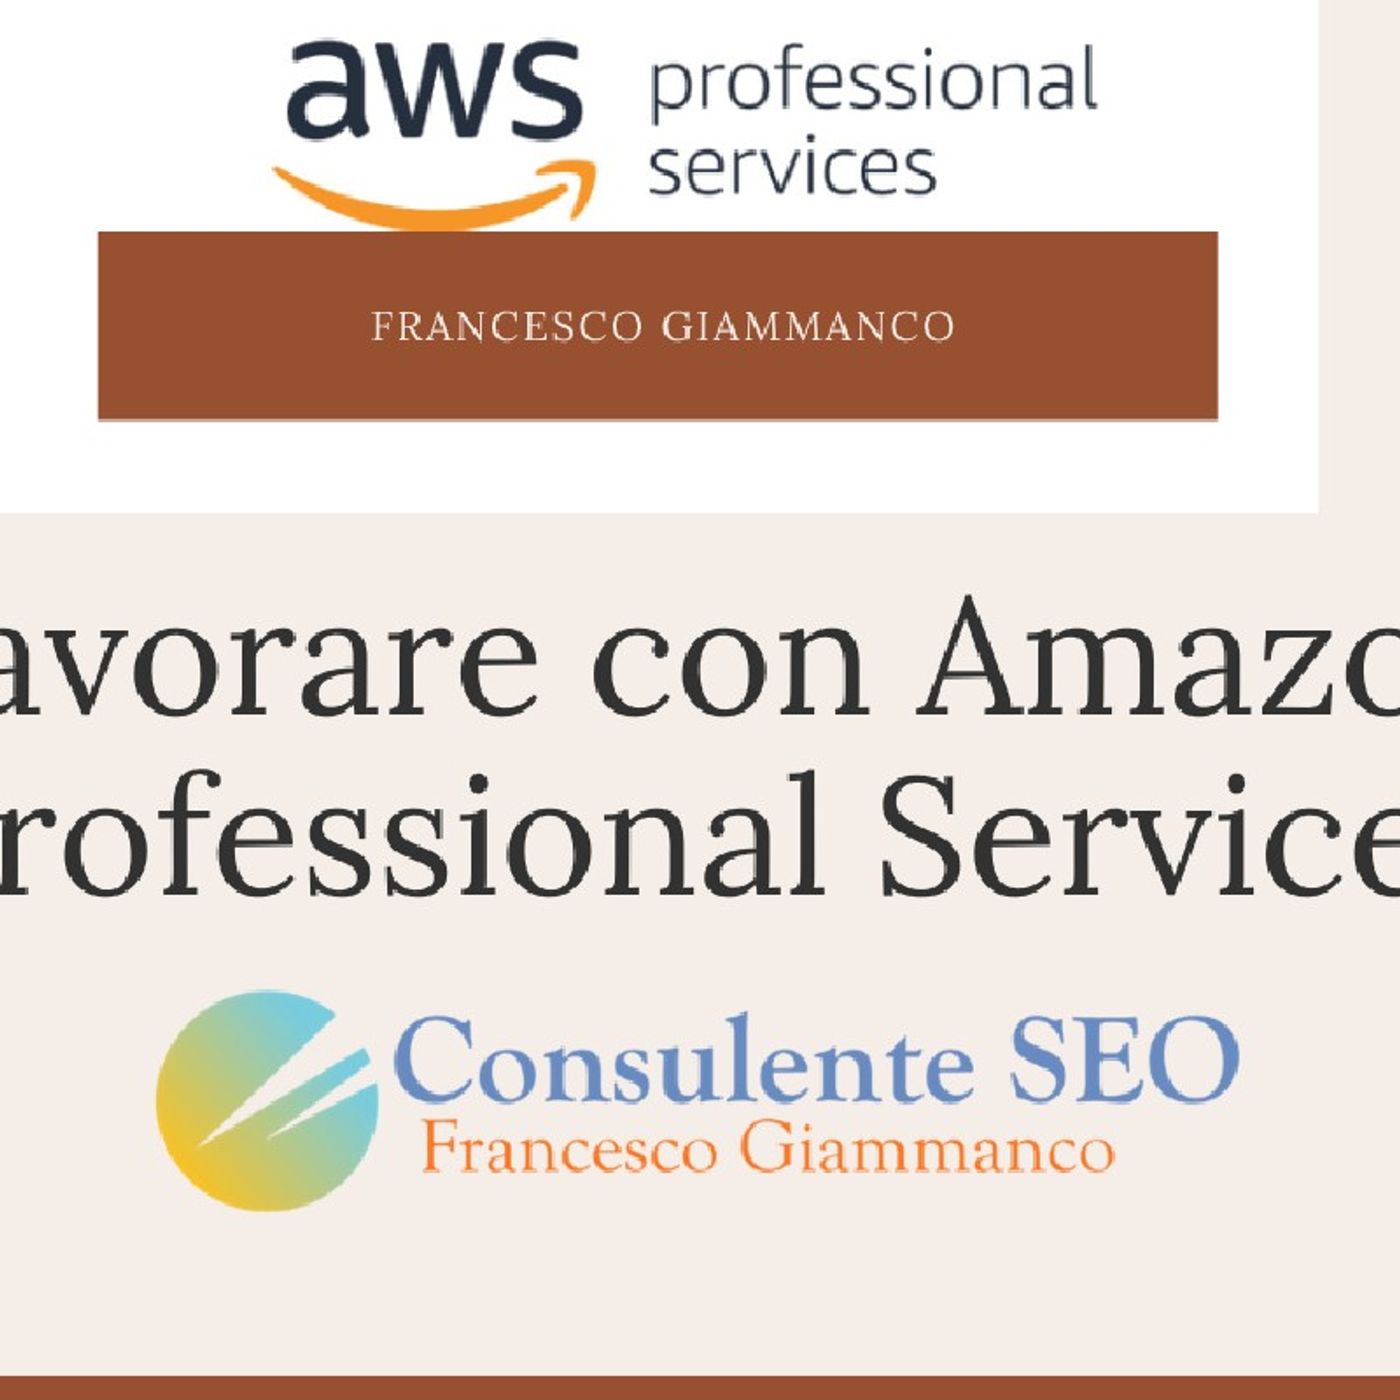 Episodio 26 - Amazon Professional Services